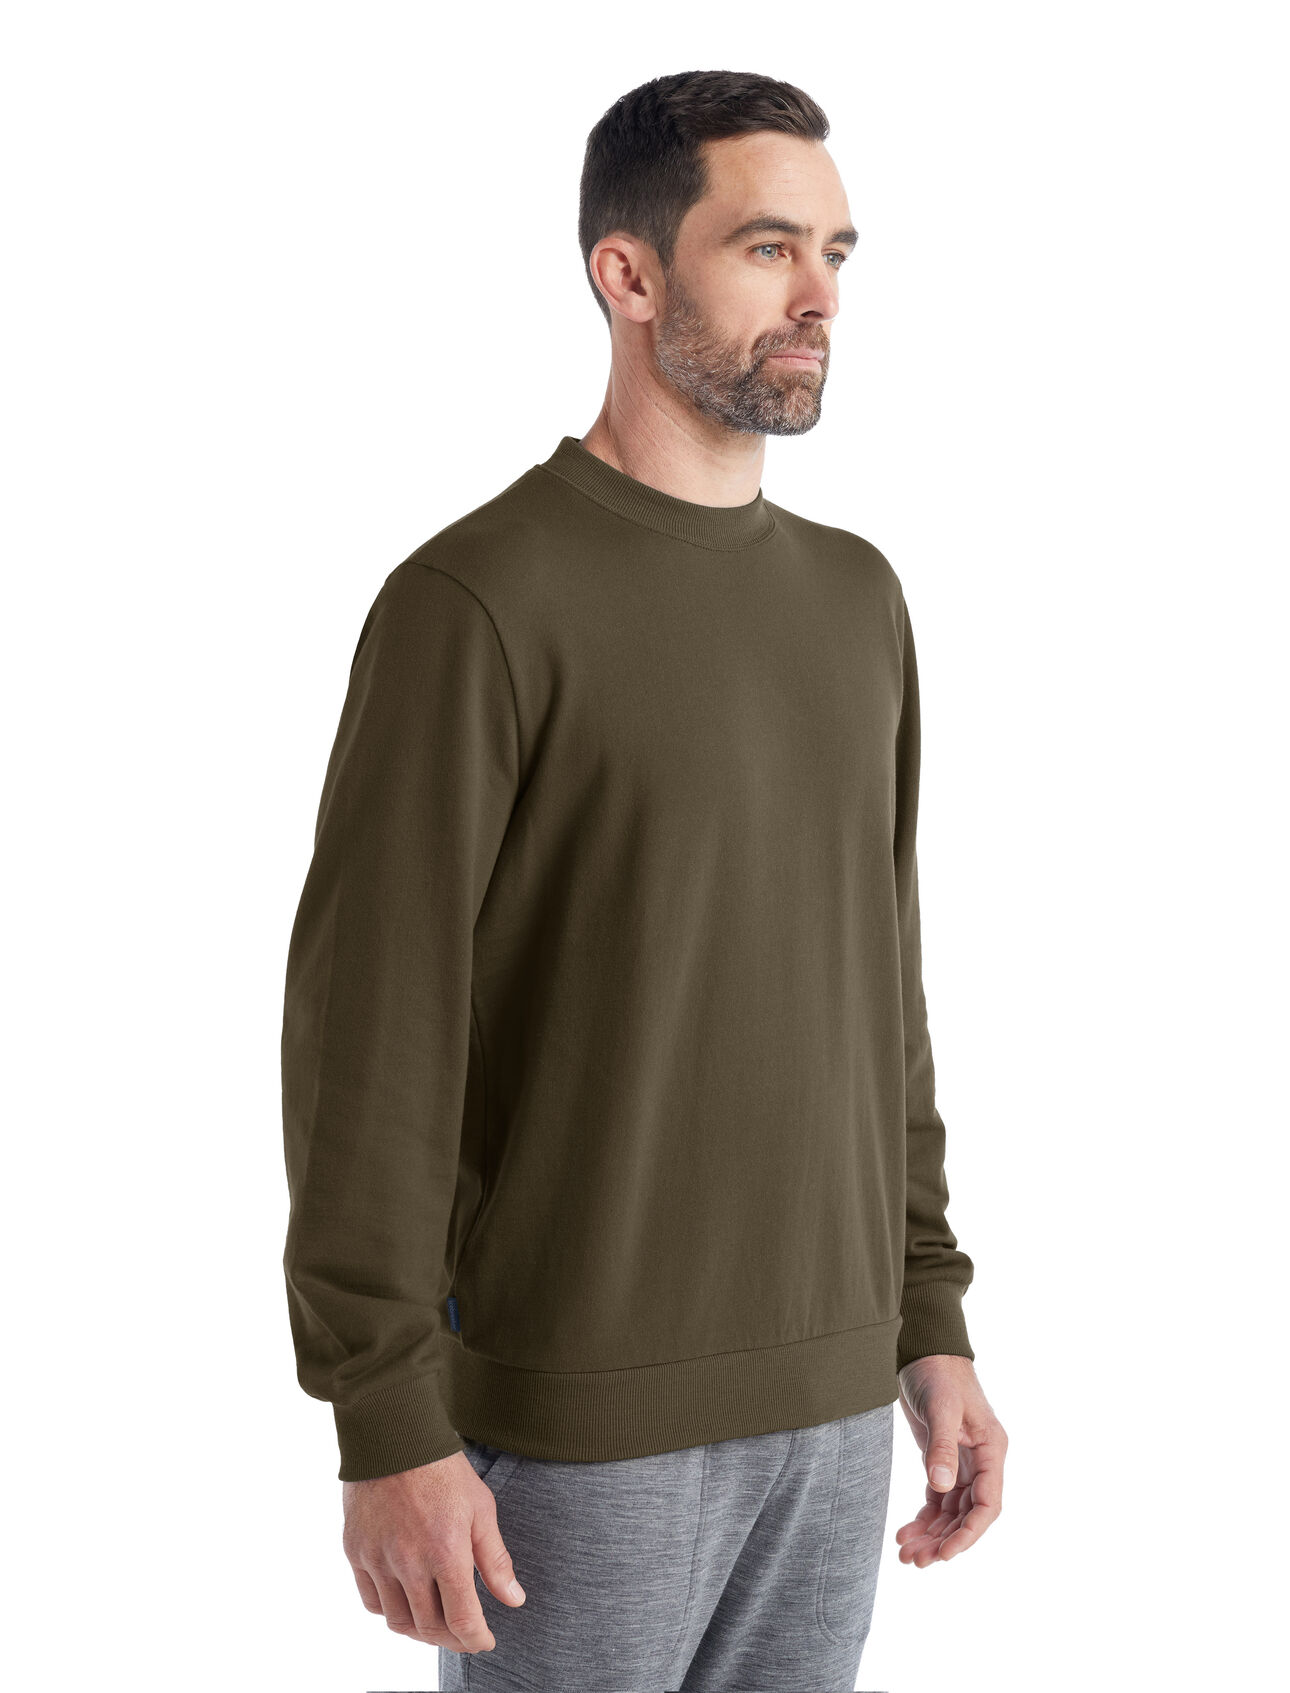 Mens Merino Shifter Long Sleeve Sweatshirt A classic and stylish sweatshirt made with soft, comfortable, 100% merino terry fabric, the Shifter Long Sleeve Sweatshirt offers versatile everyday layering performance.